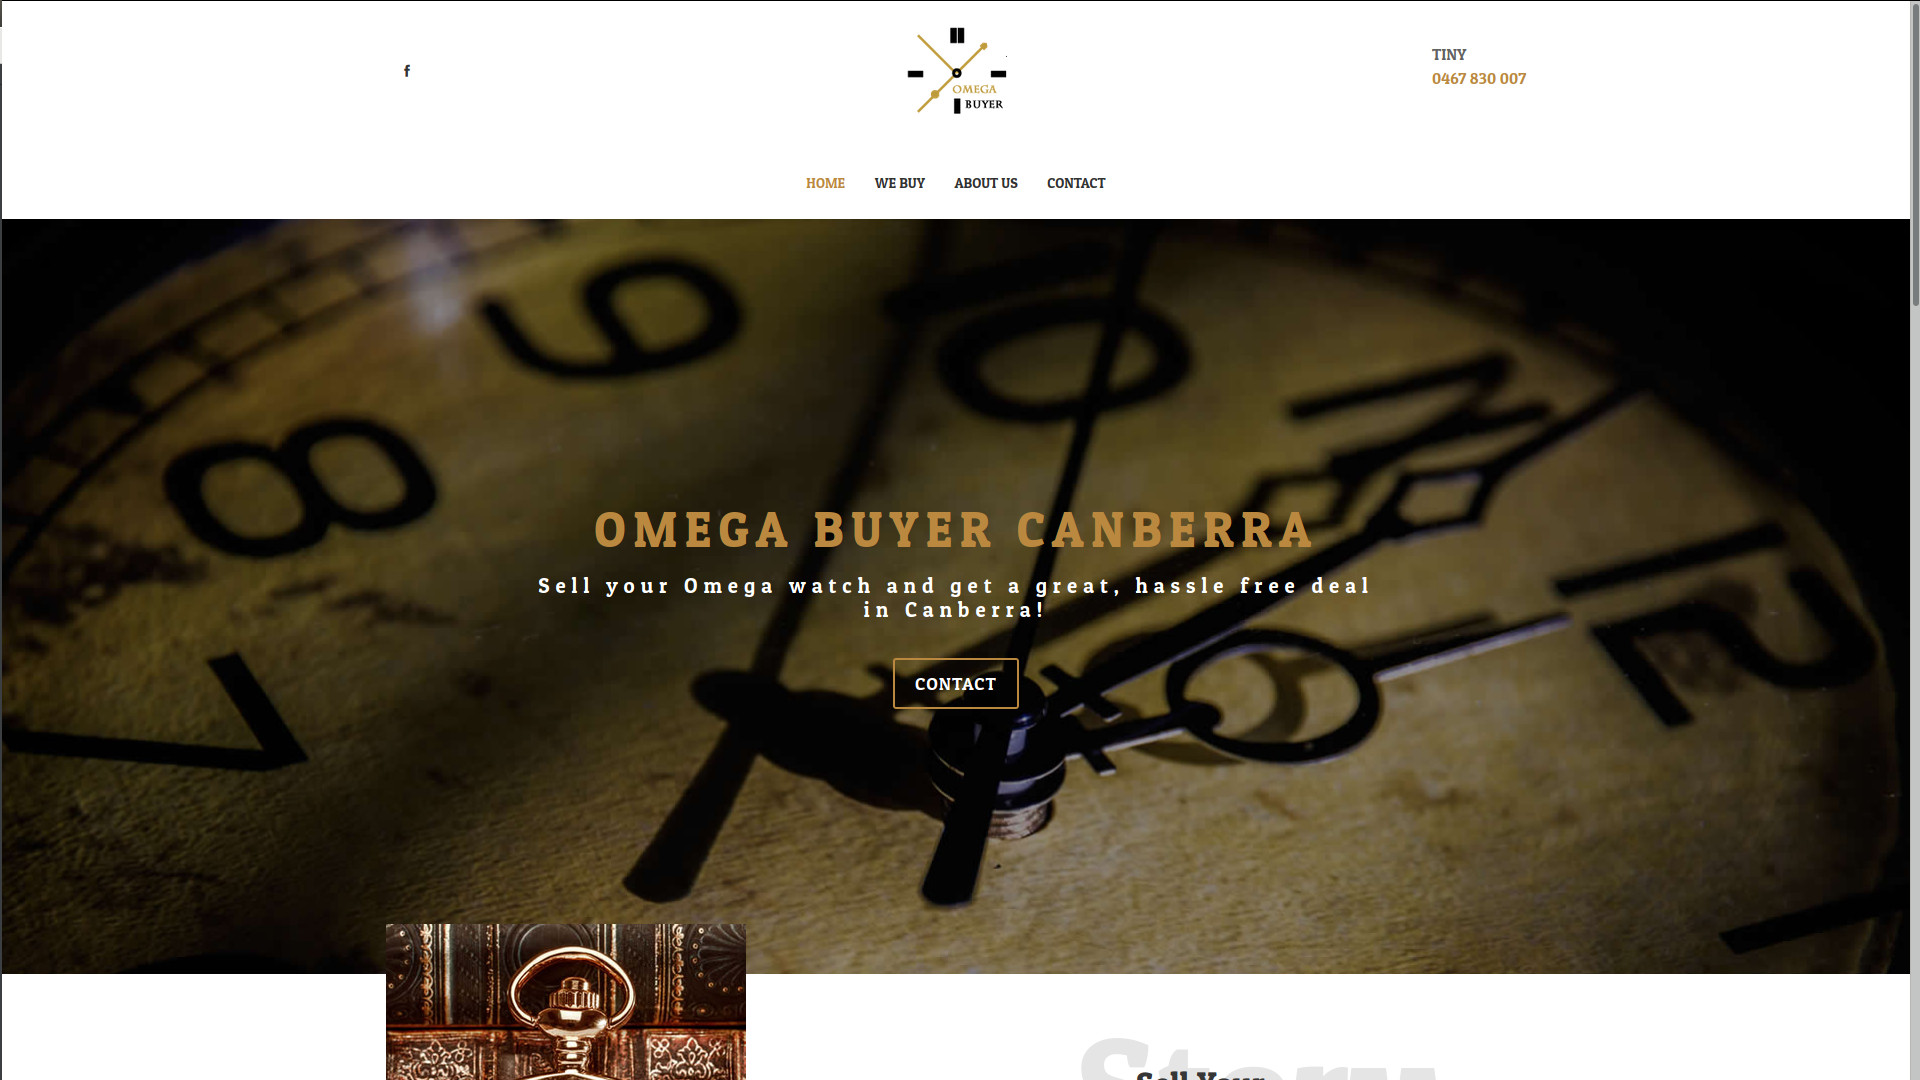 Omega Buyer